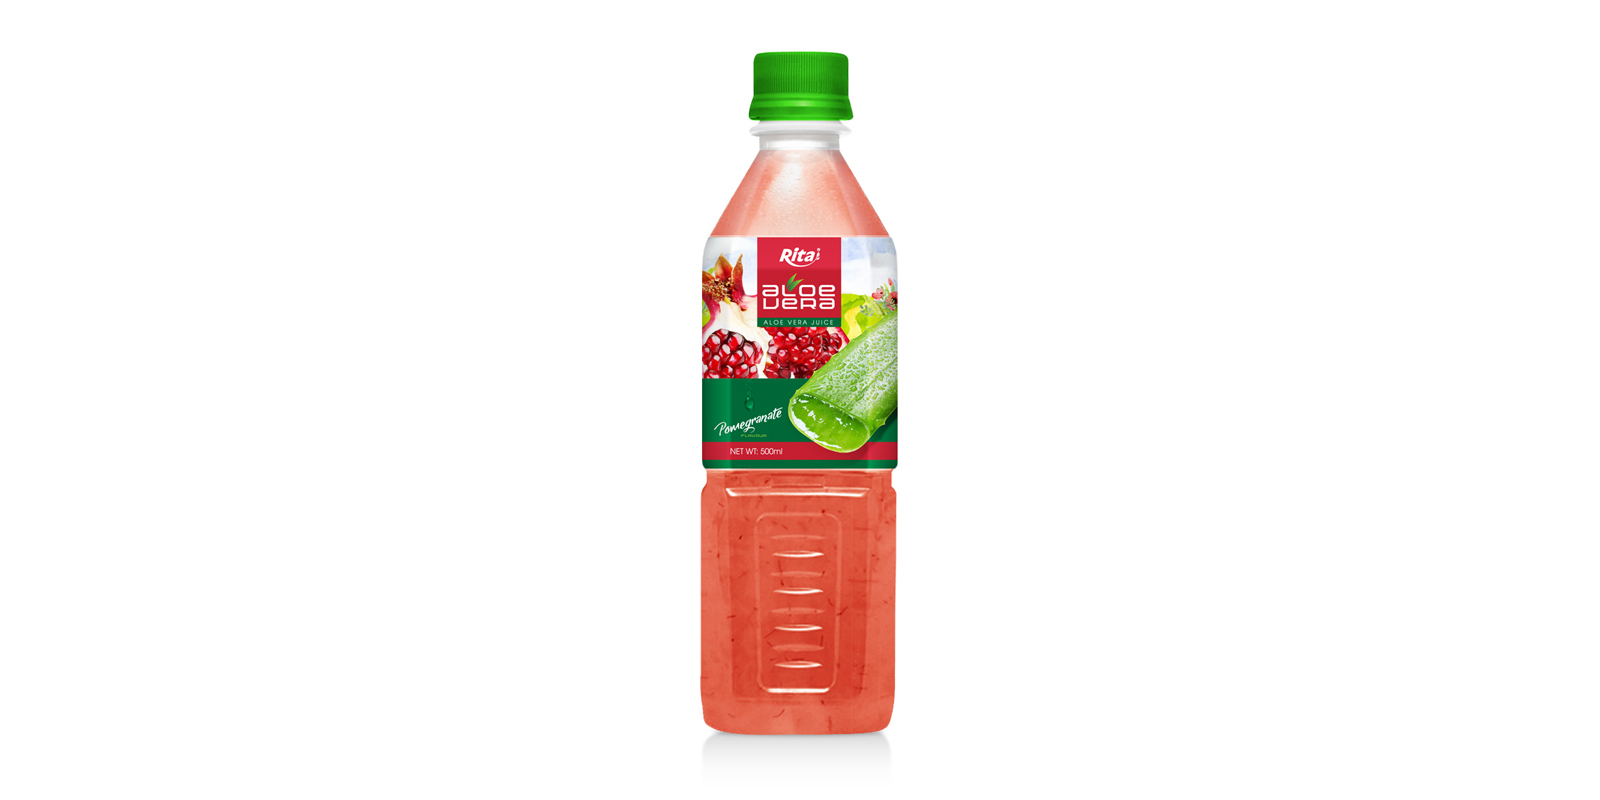 Aloe vera pomeganate  flavor 500ml Pet Bottle